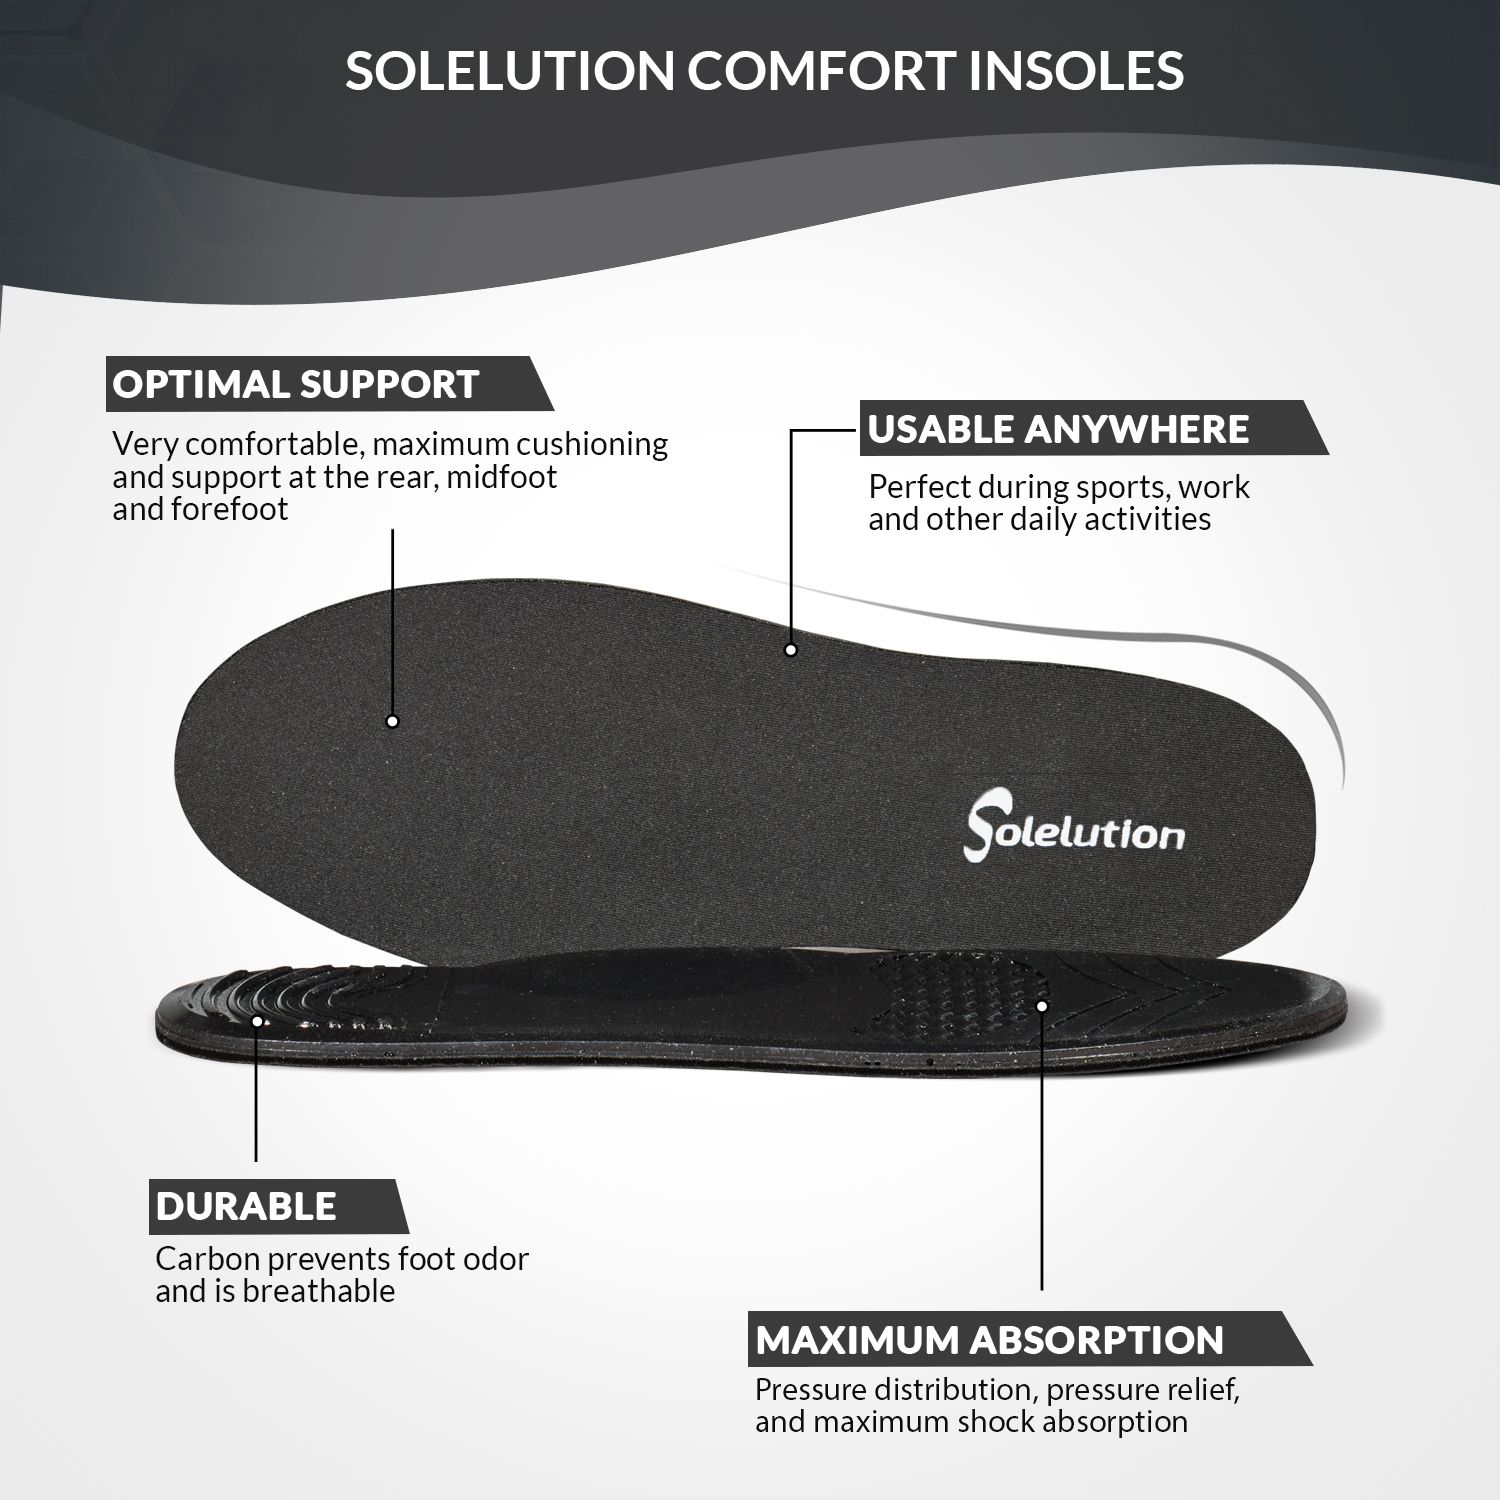 solelution comfort insoles product information